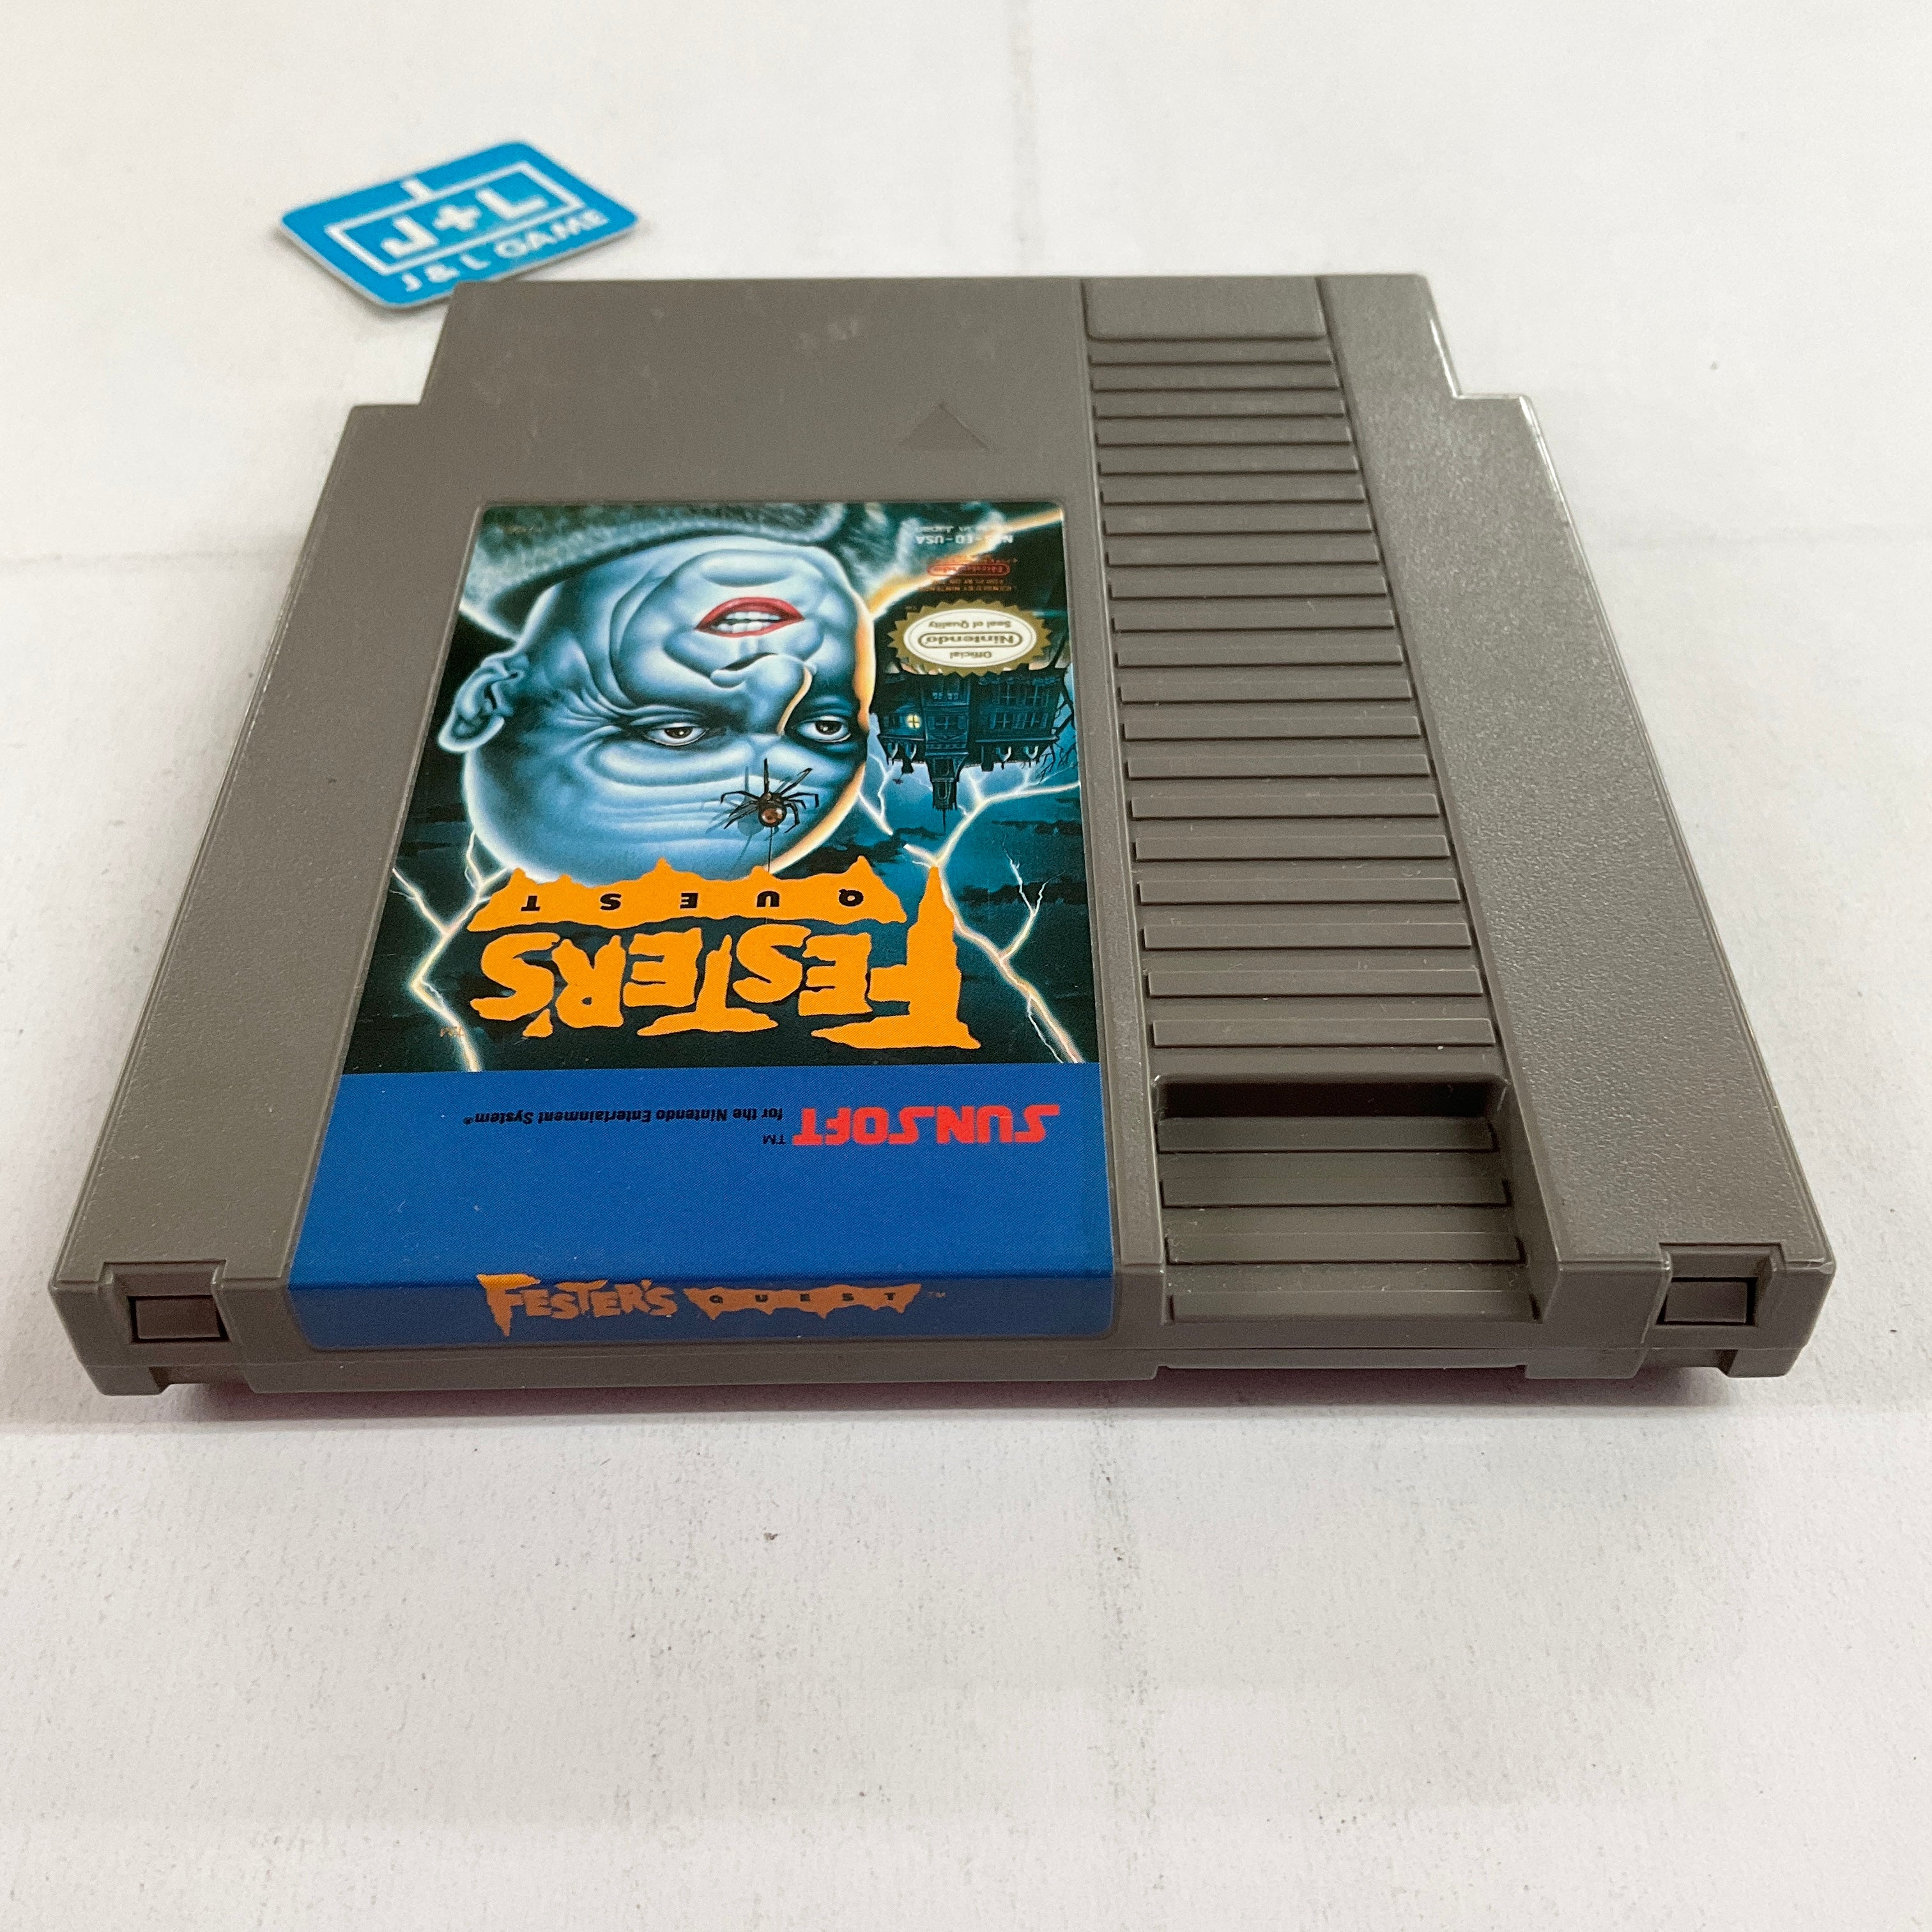 Fester's Quest - (NES) Nintendo Entertainment System [Pre-Owned] Video Games SunSoft   